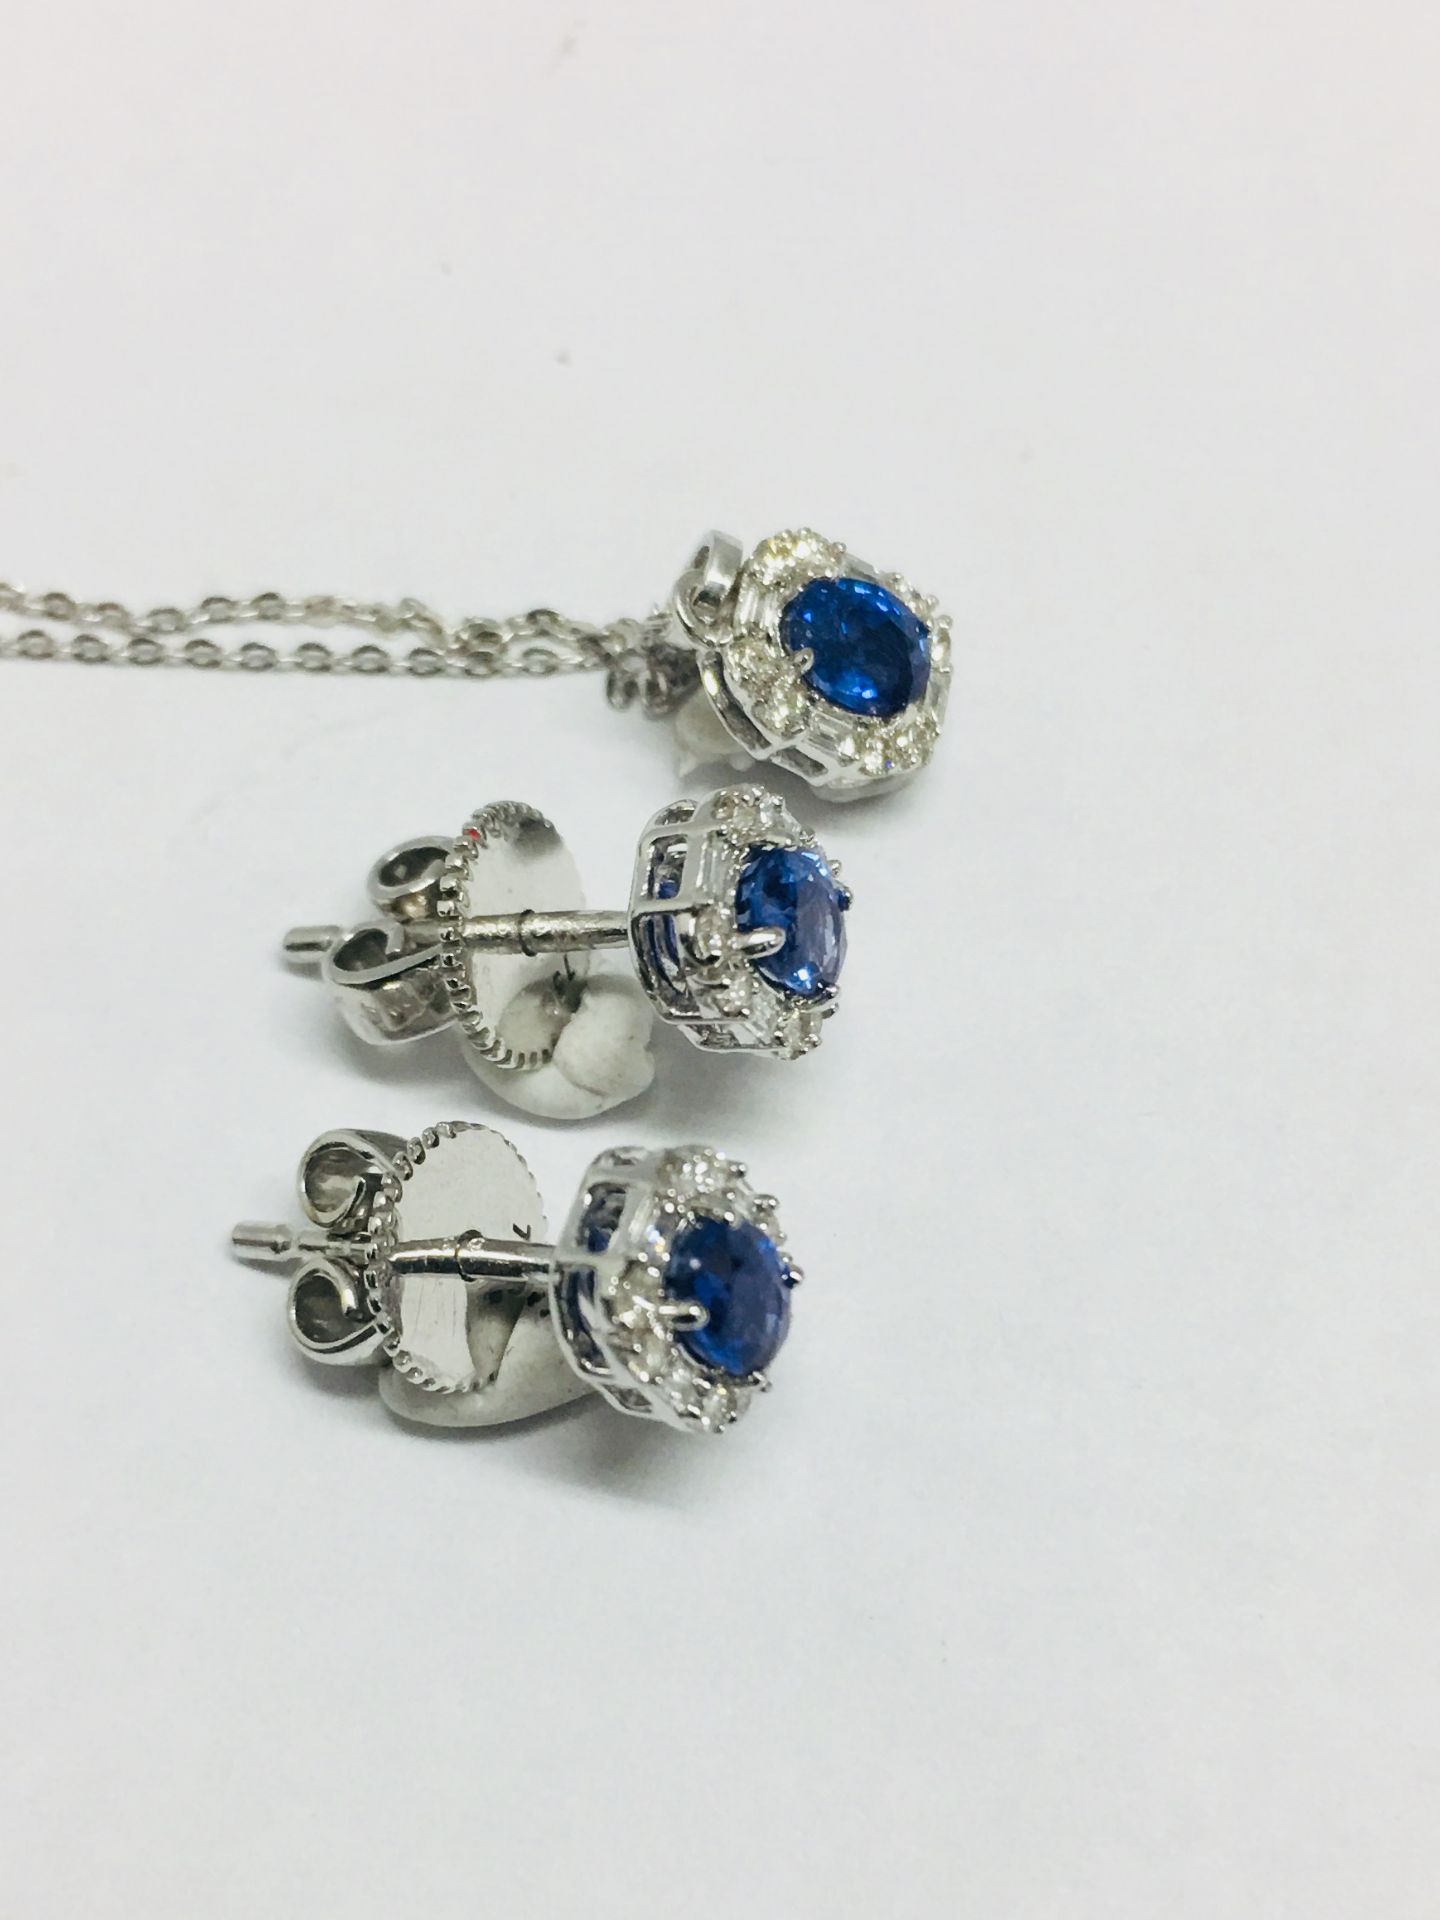 18ct Sapphire diamond Earrings and Pendant Set,0.78ct natural sapphire,0.24ct diamond brilliant - Image 5 of 5